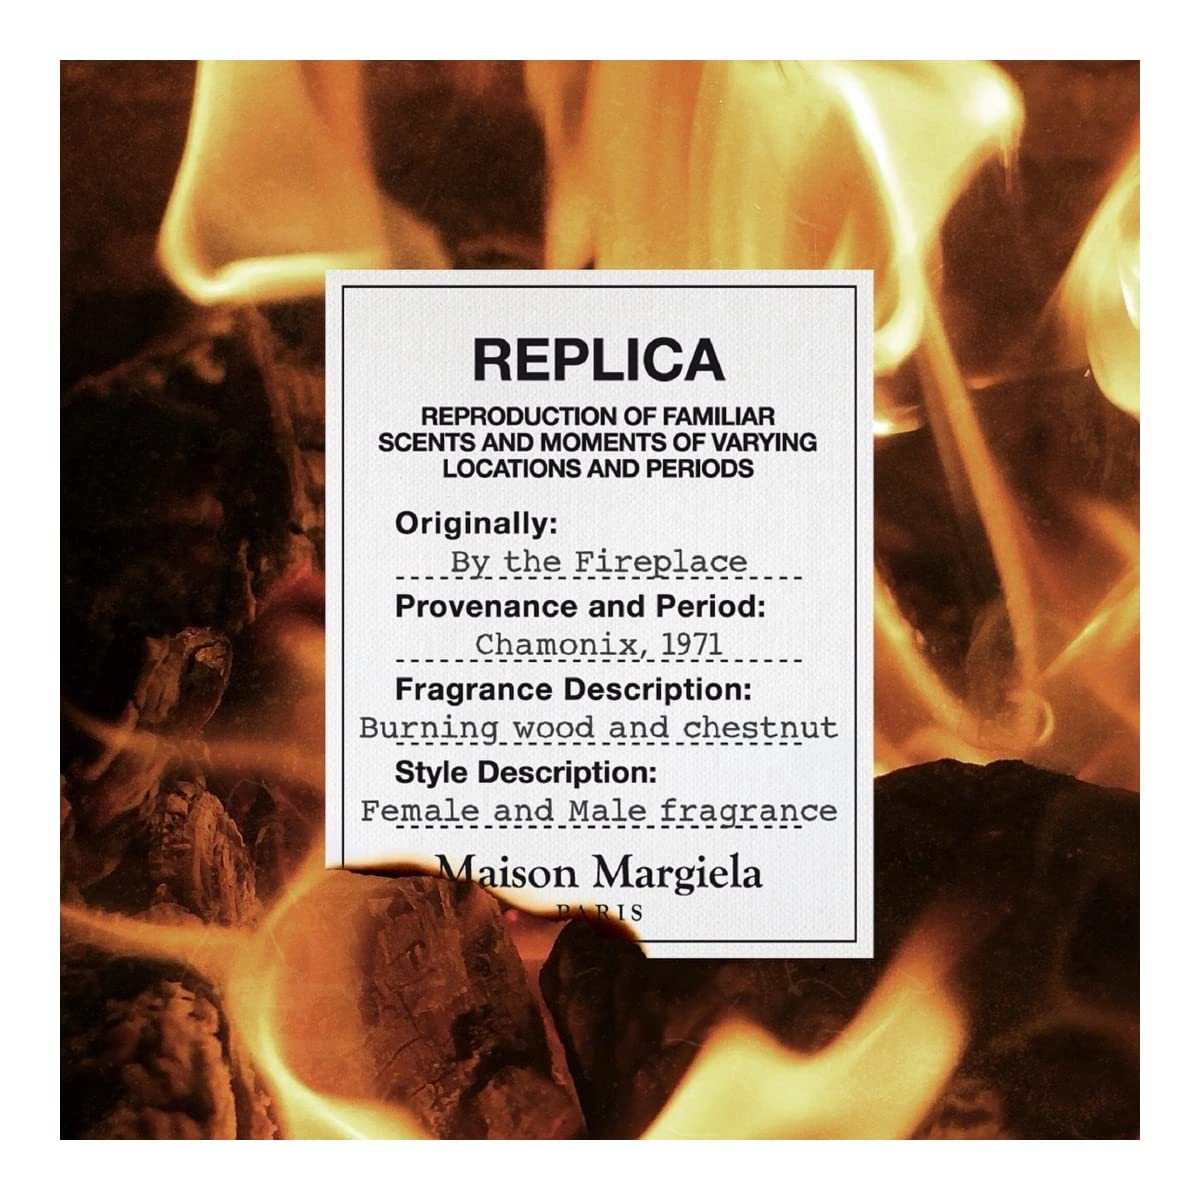 Eau de Toilette Spray for Maison Margiela | Replica by the Fireplace | Smoky Woody Aroma | 3.4 oz